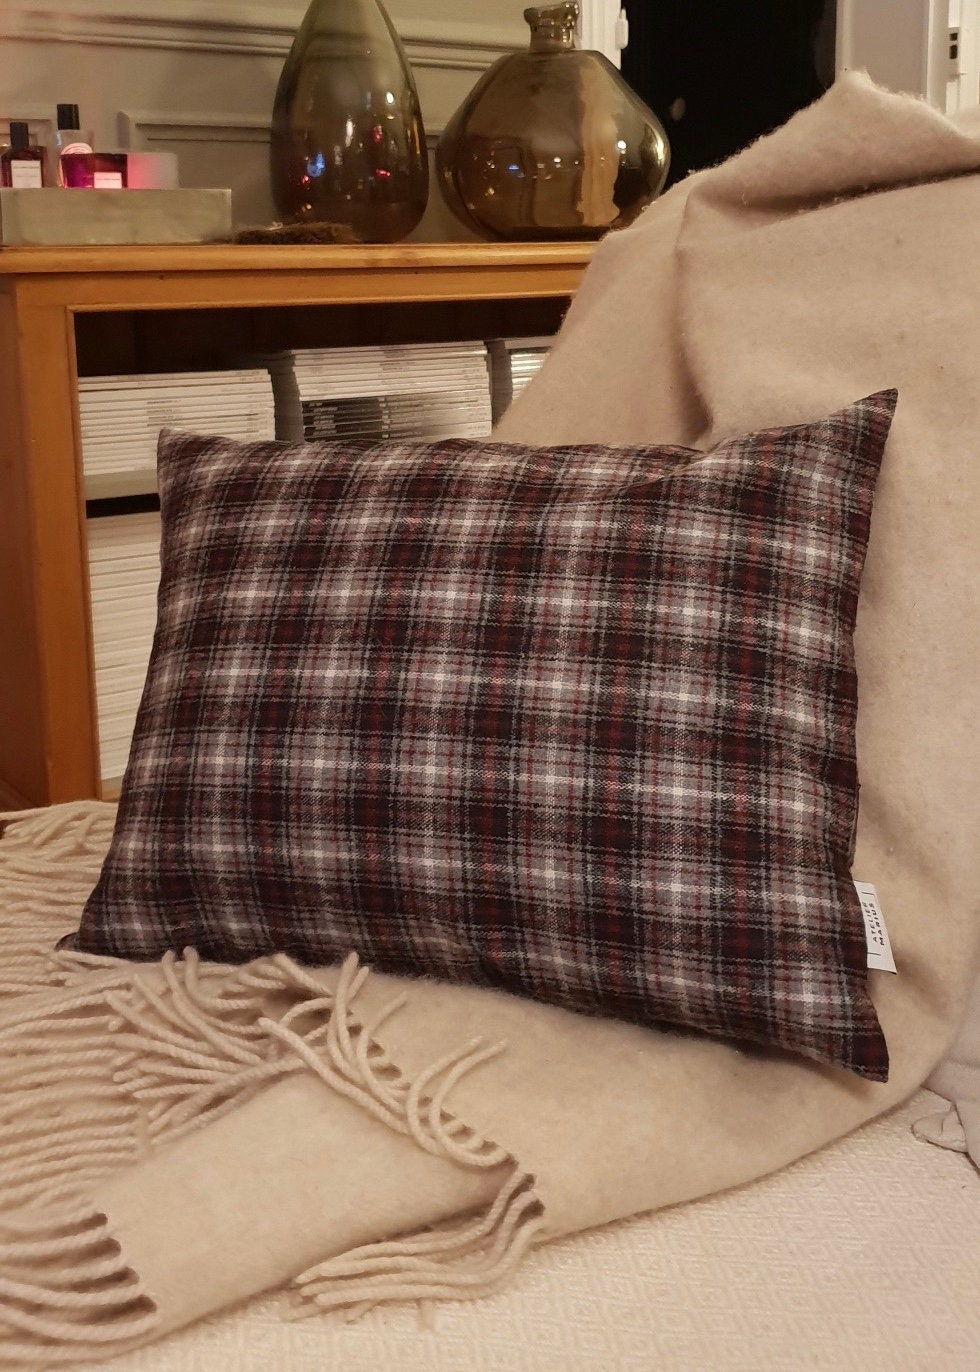 Decorative cushion in soft wool pattern black black black tartan and burgundy wallet cover